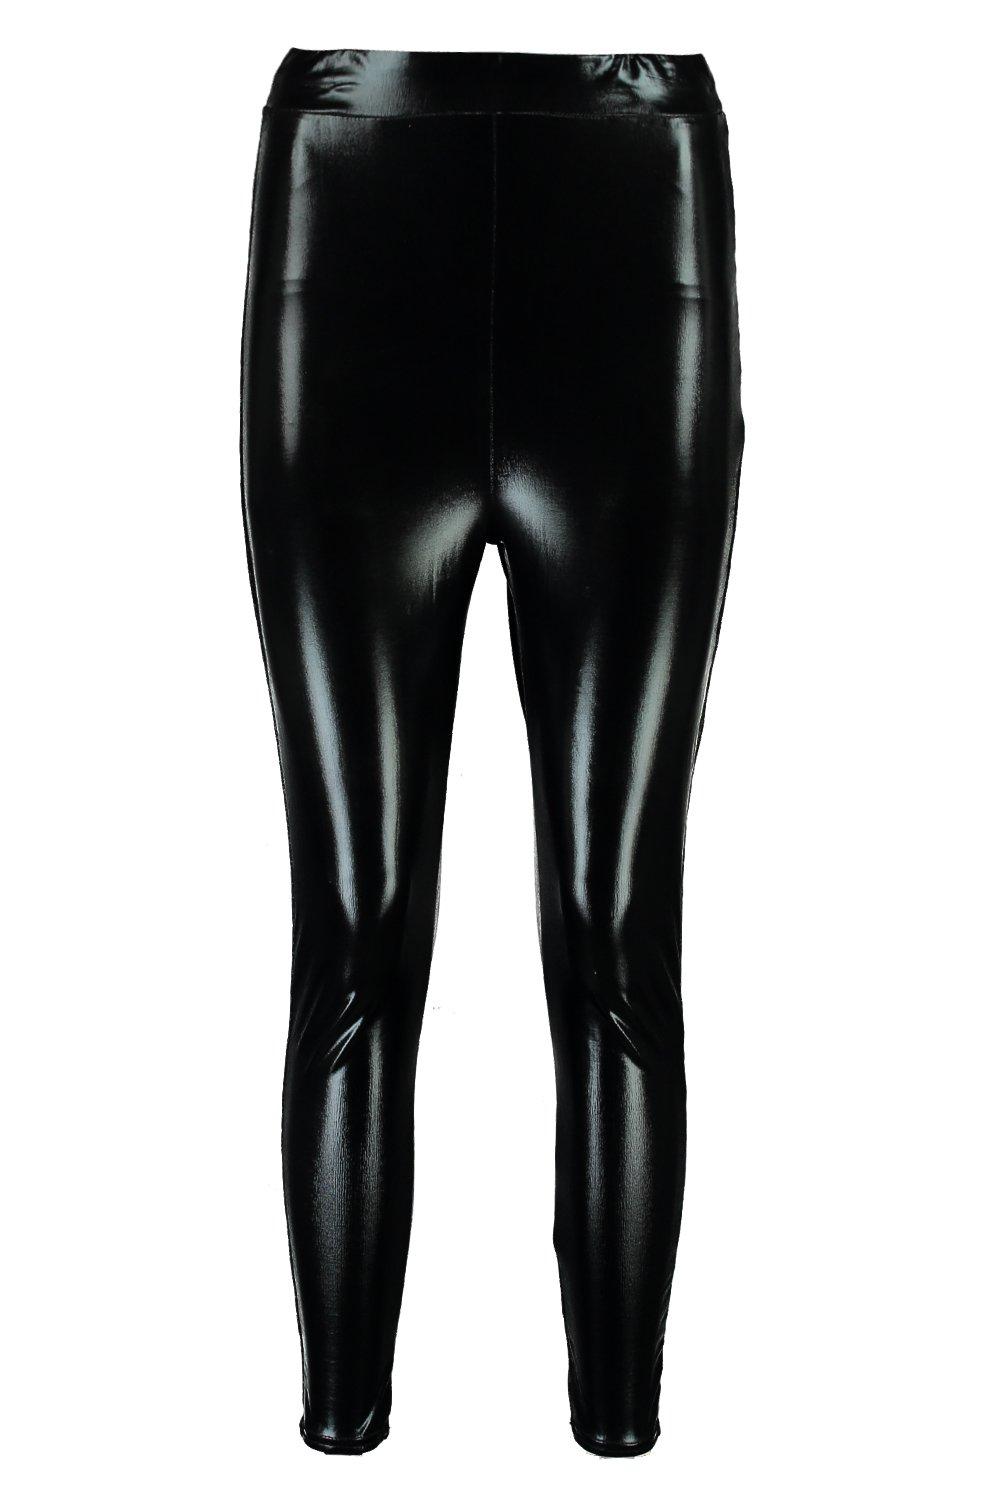 https://media.boohoo.com/i/boohoo/dzz59322_black_xl_2/female-black-sofi-super-shiny-wet-look-leggings